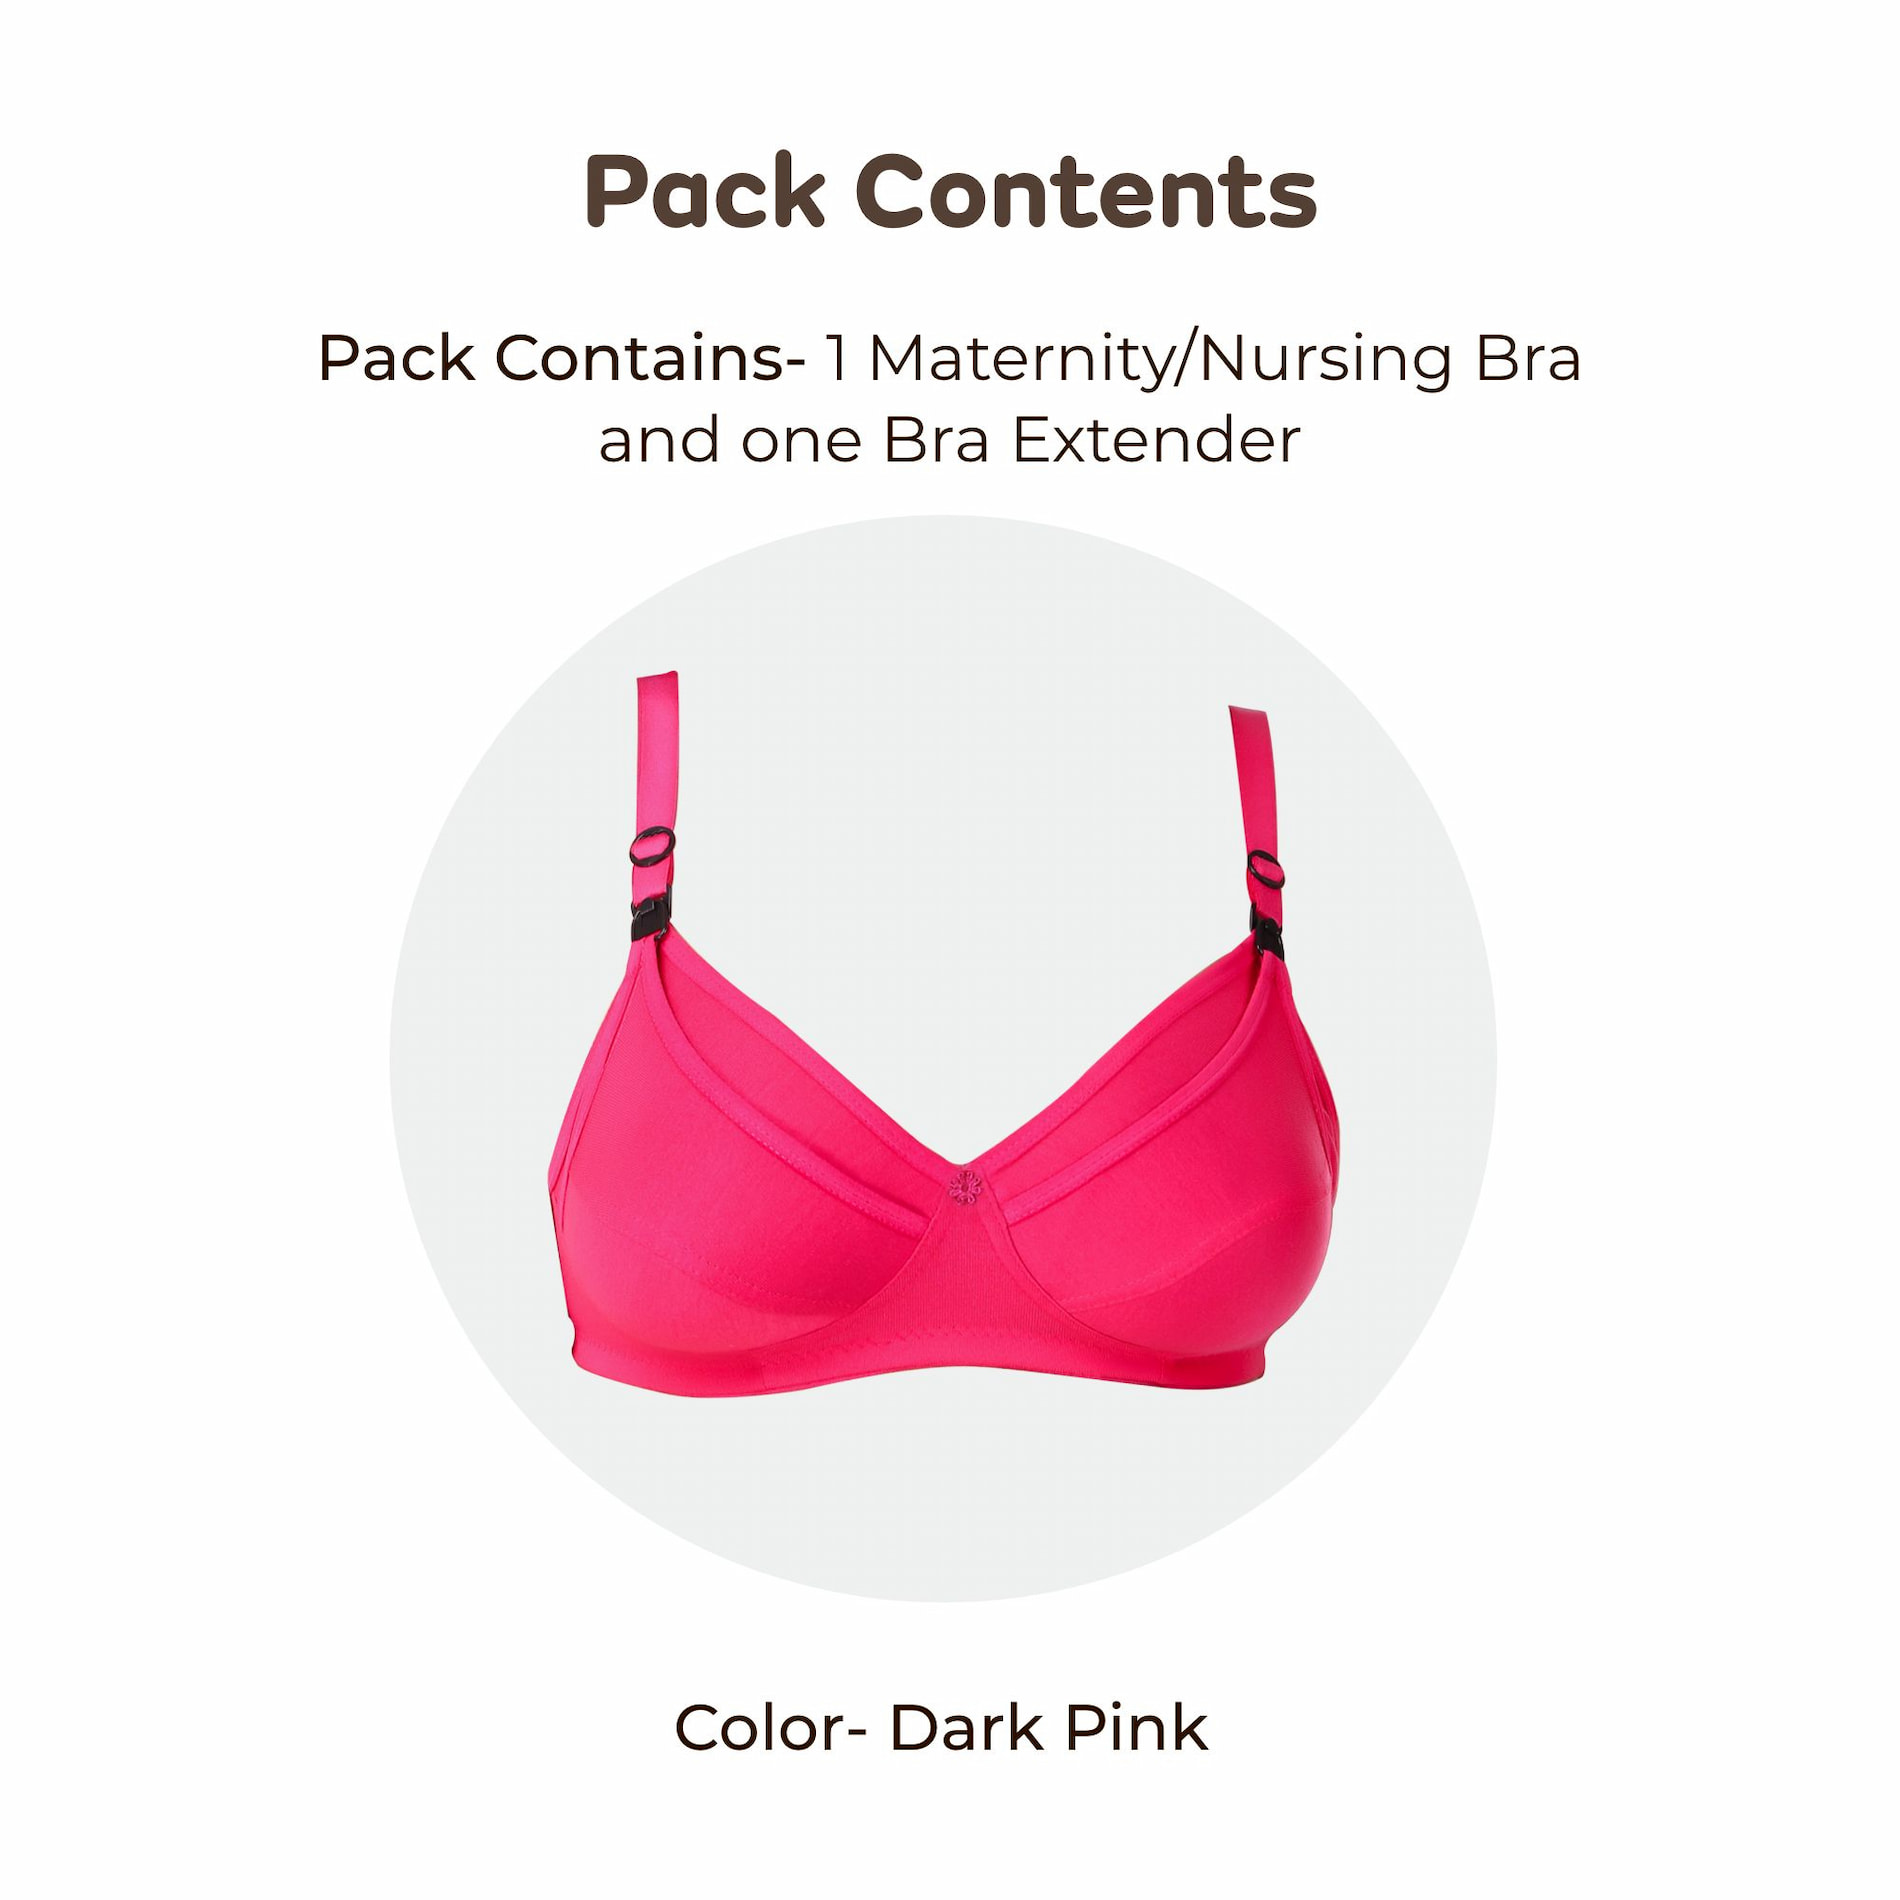 Maternity/Nursing Bras Non-Wired, Non-Padded with free Bra Extender - Dark Pink 38 B 